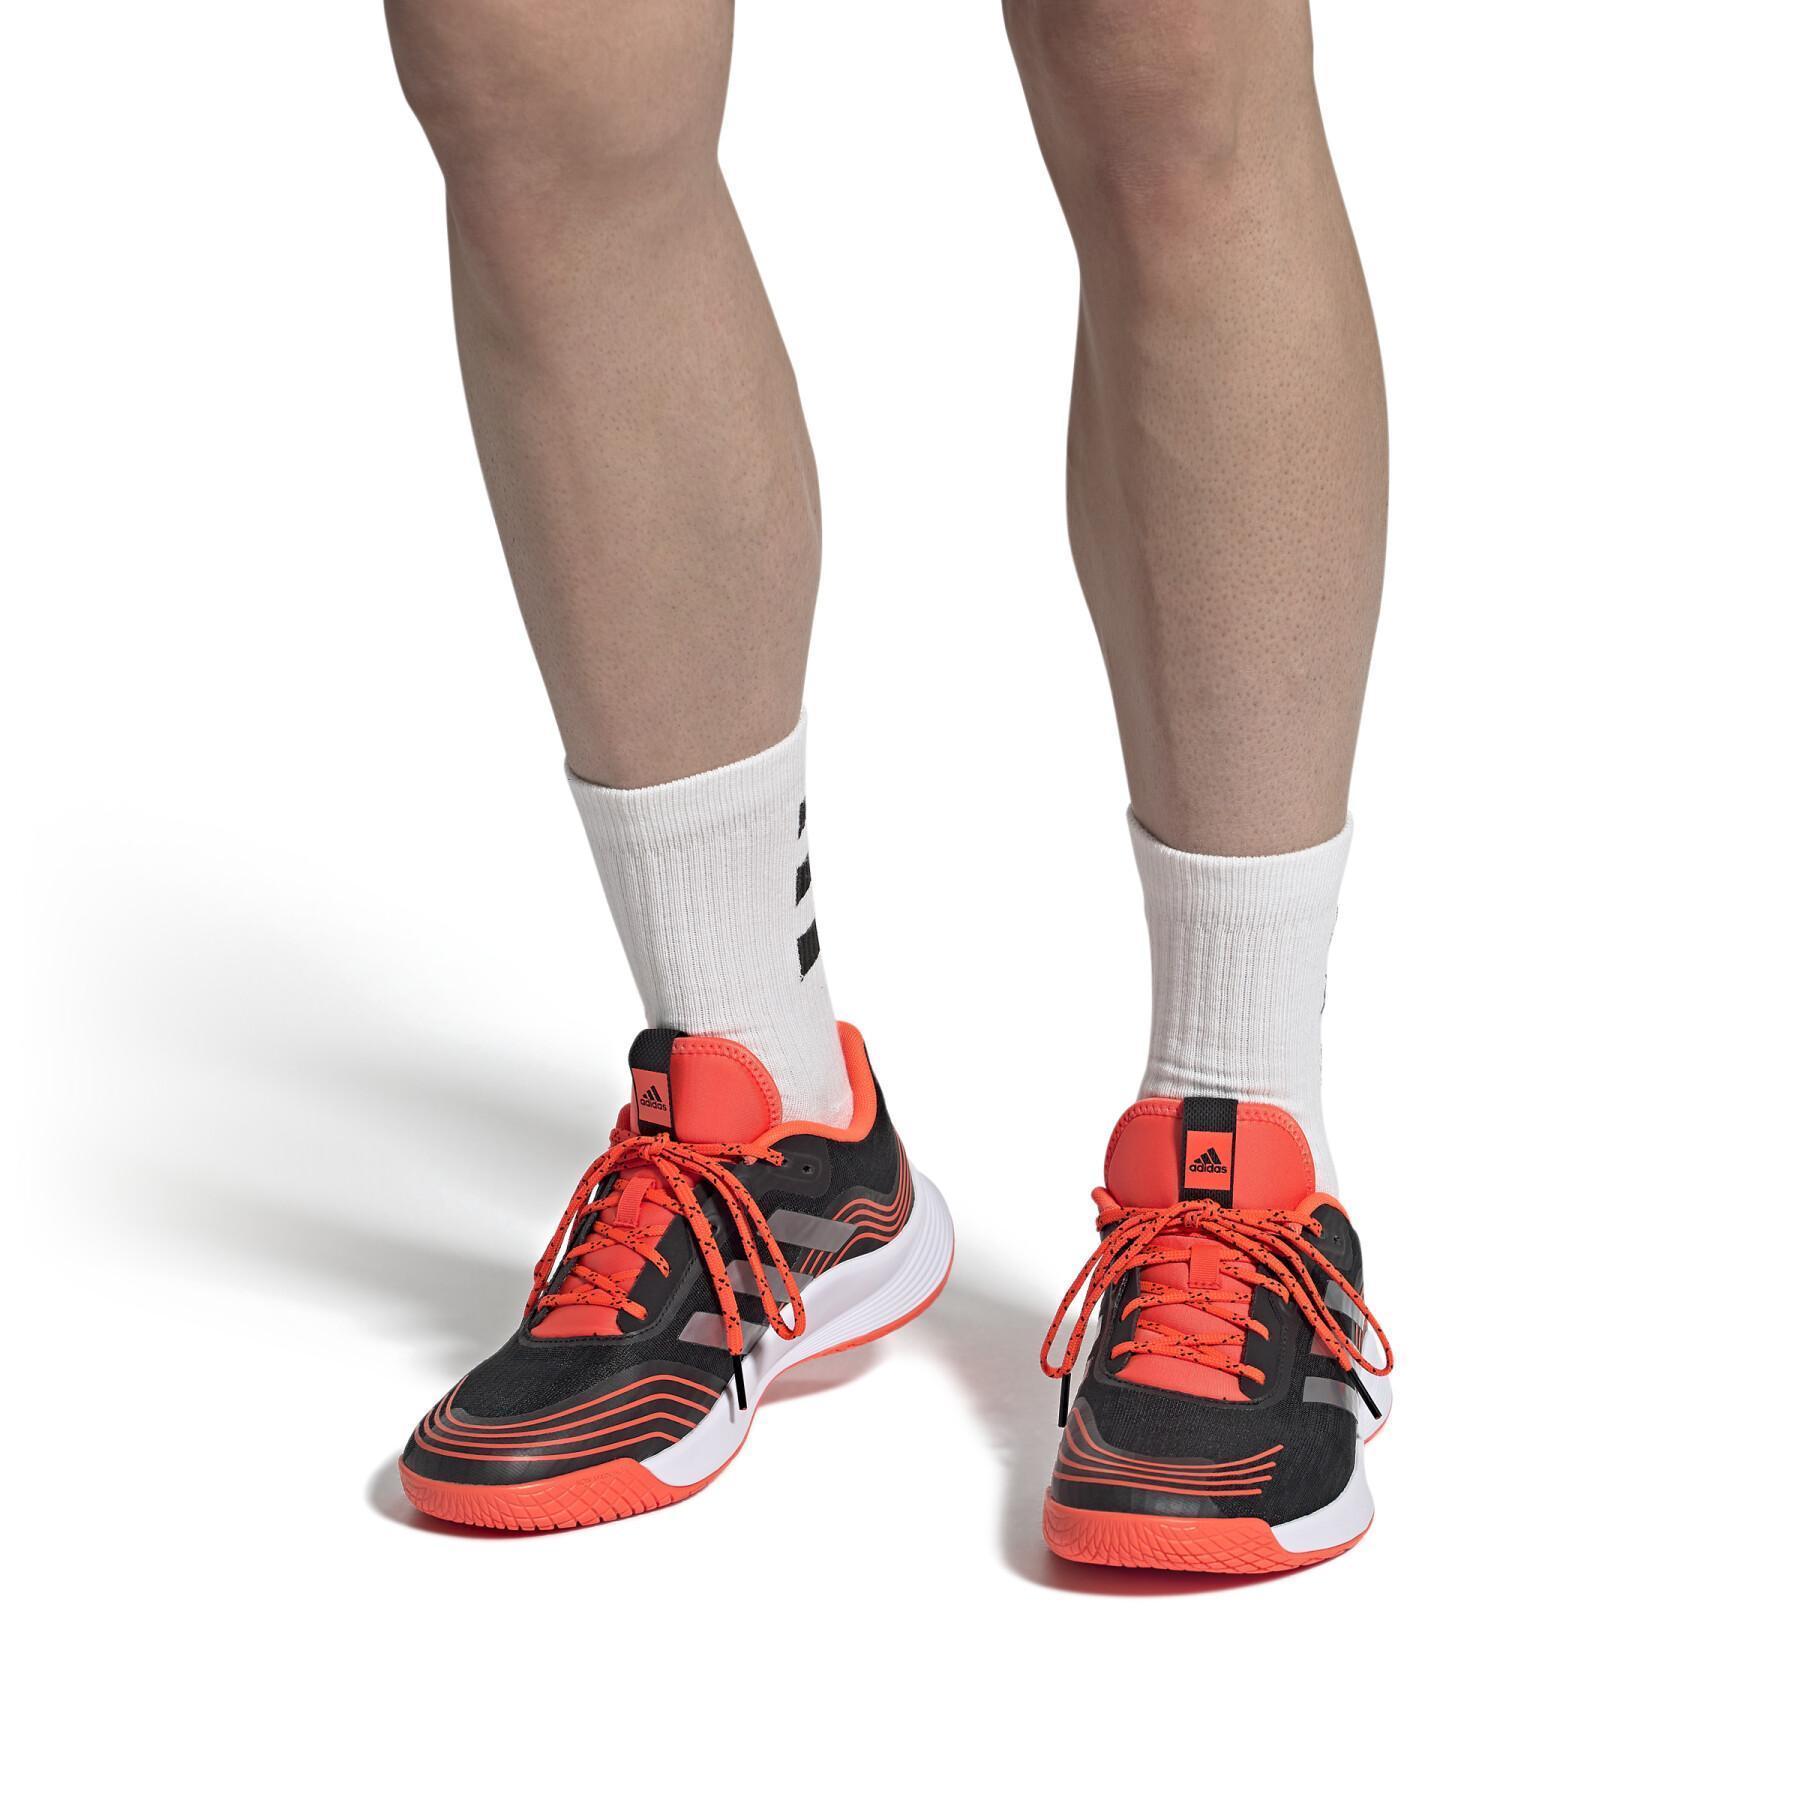 Volleyball shoes adidas Novaflight